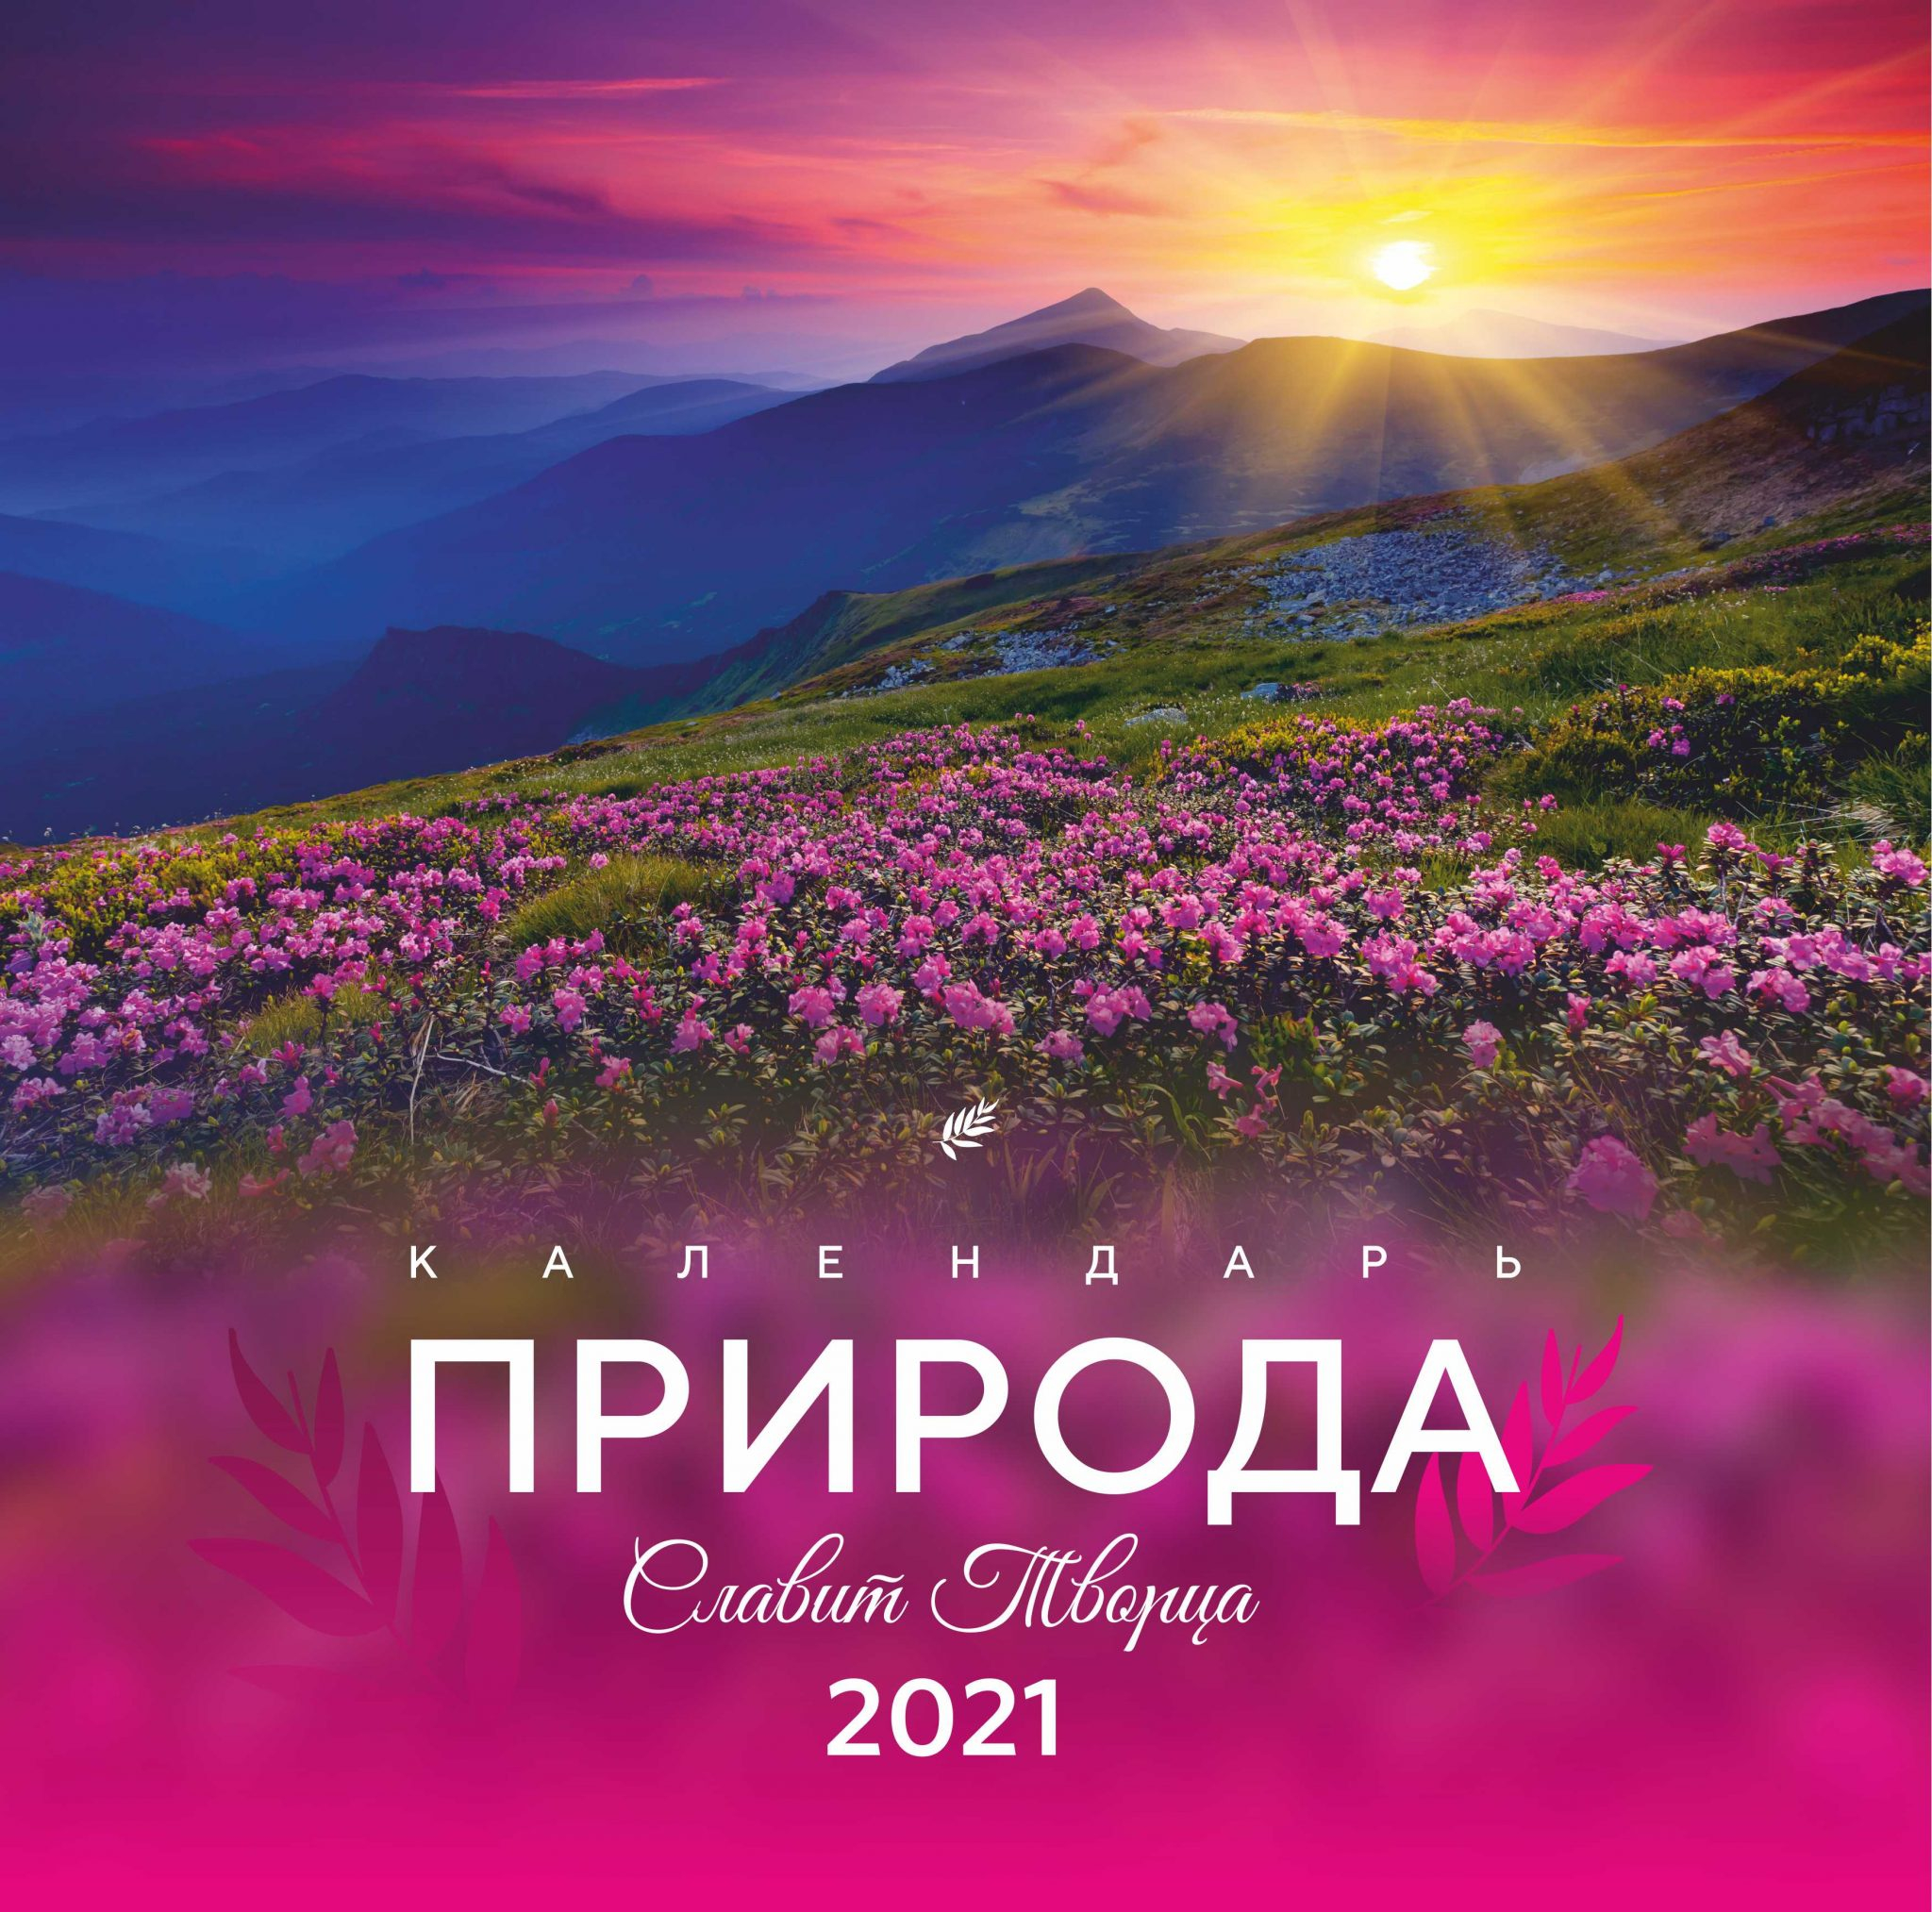 Календарь "Природа" 2021